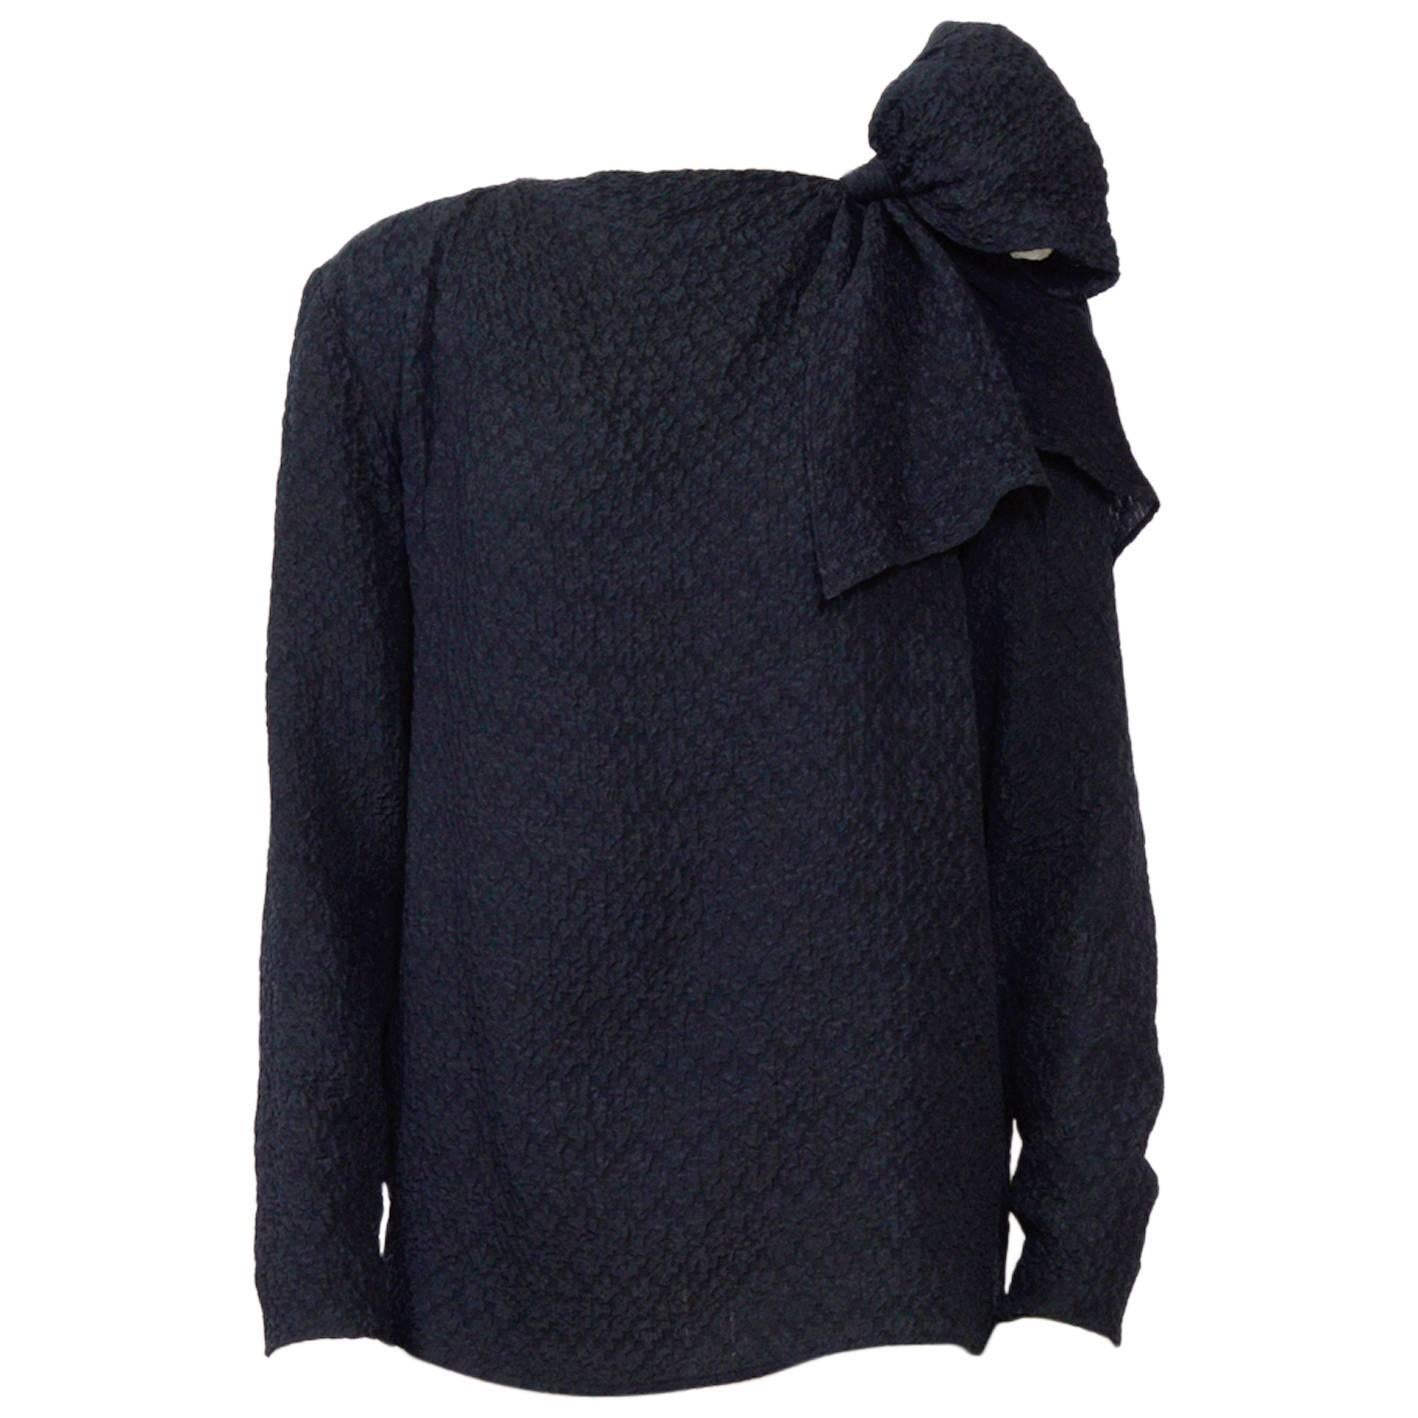 Vintage 1970s Yves saint Laurent black silk blouse